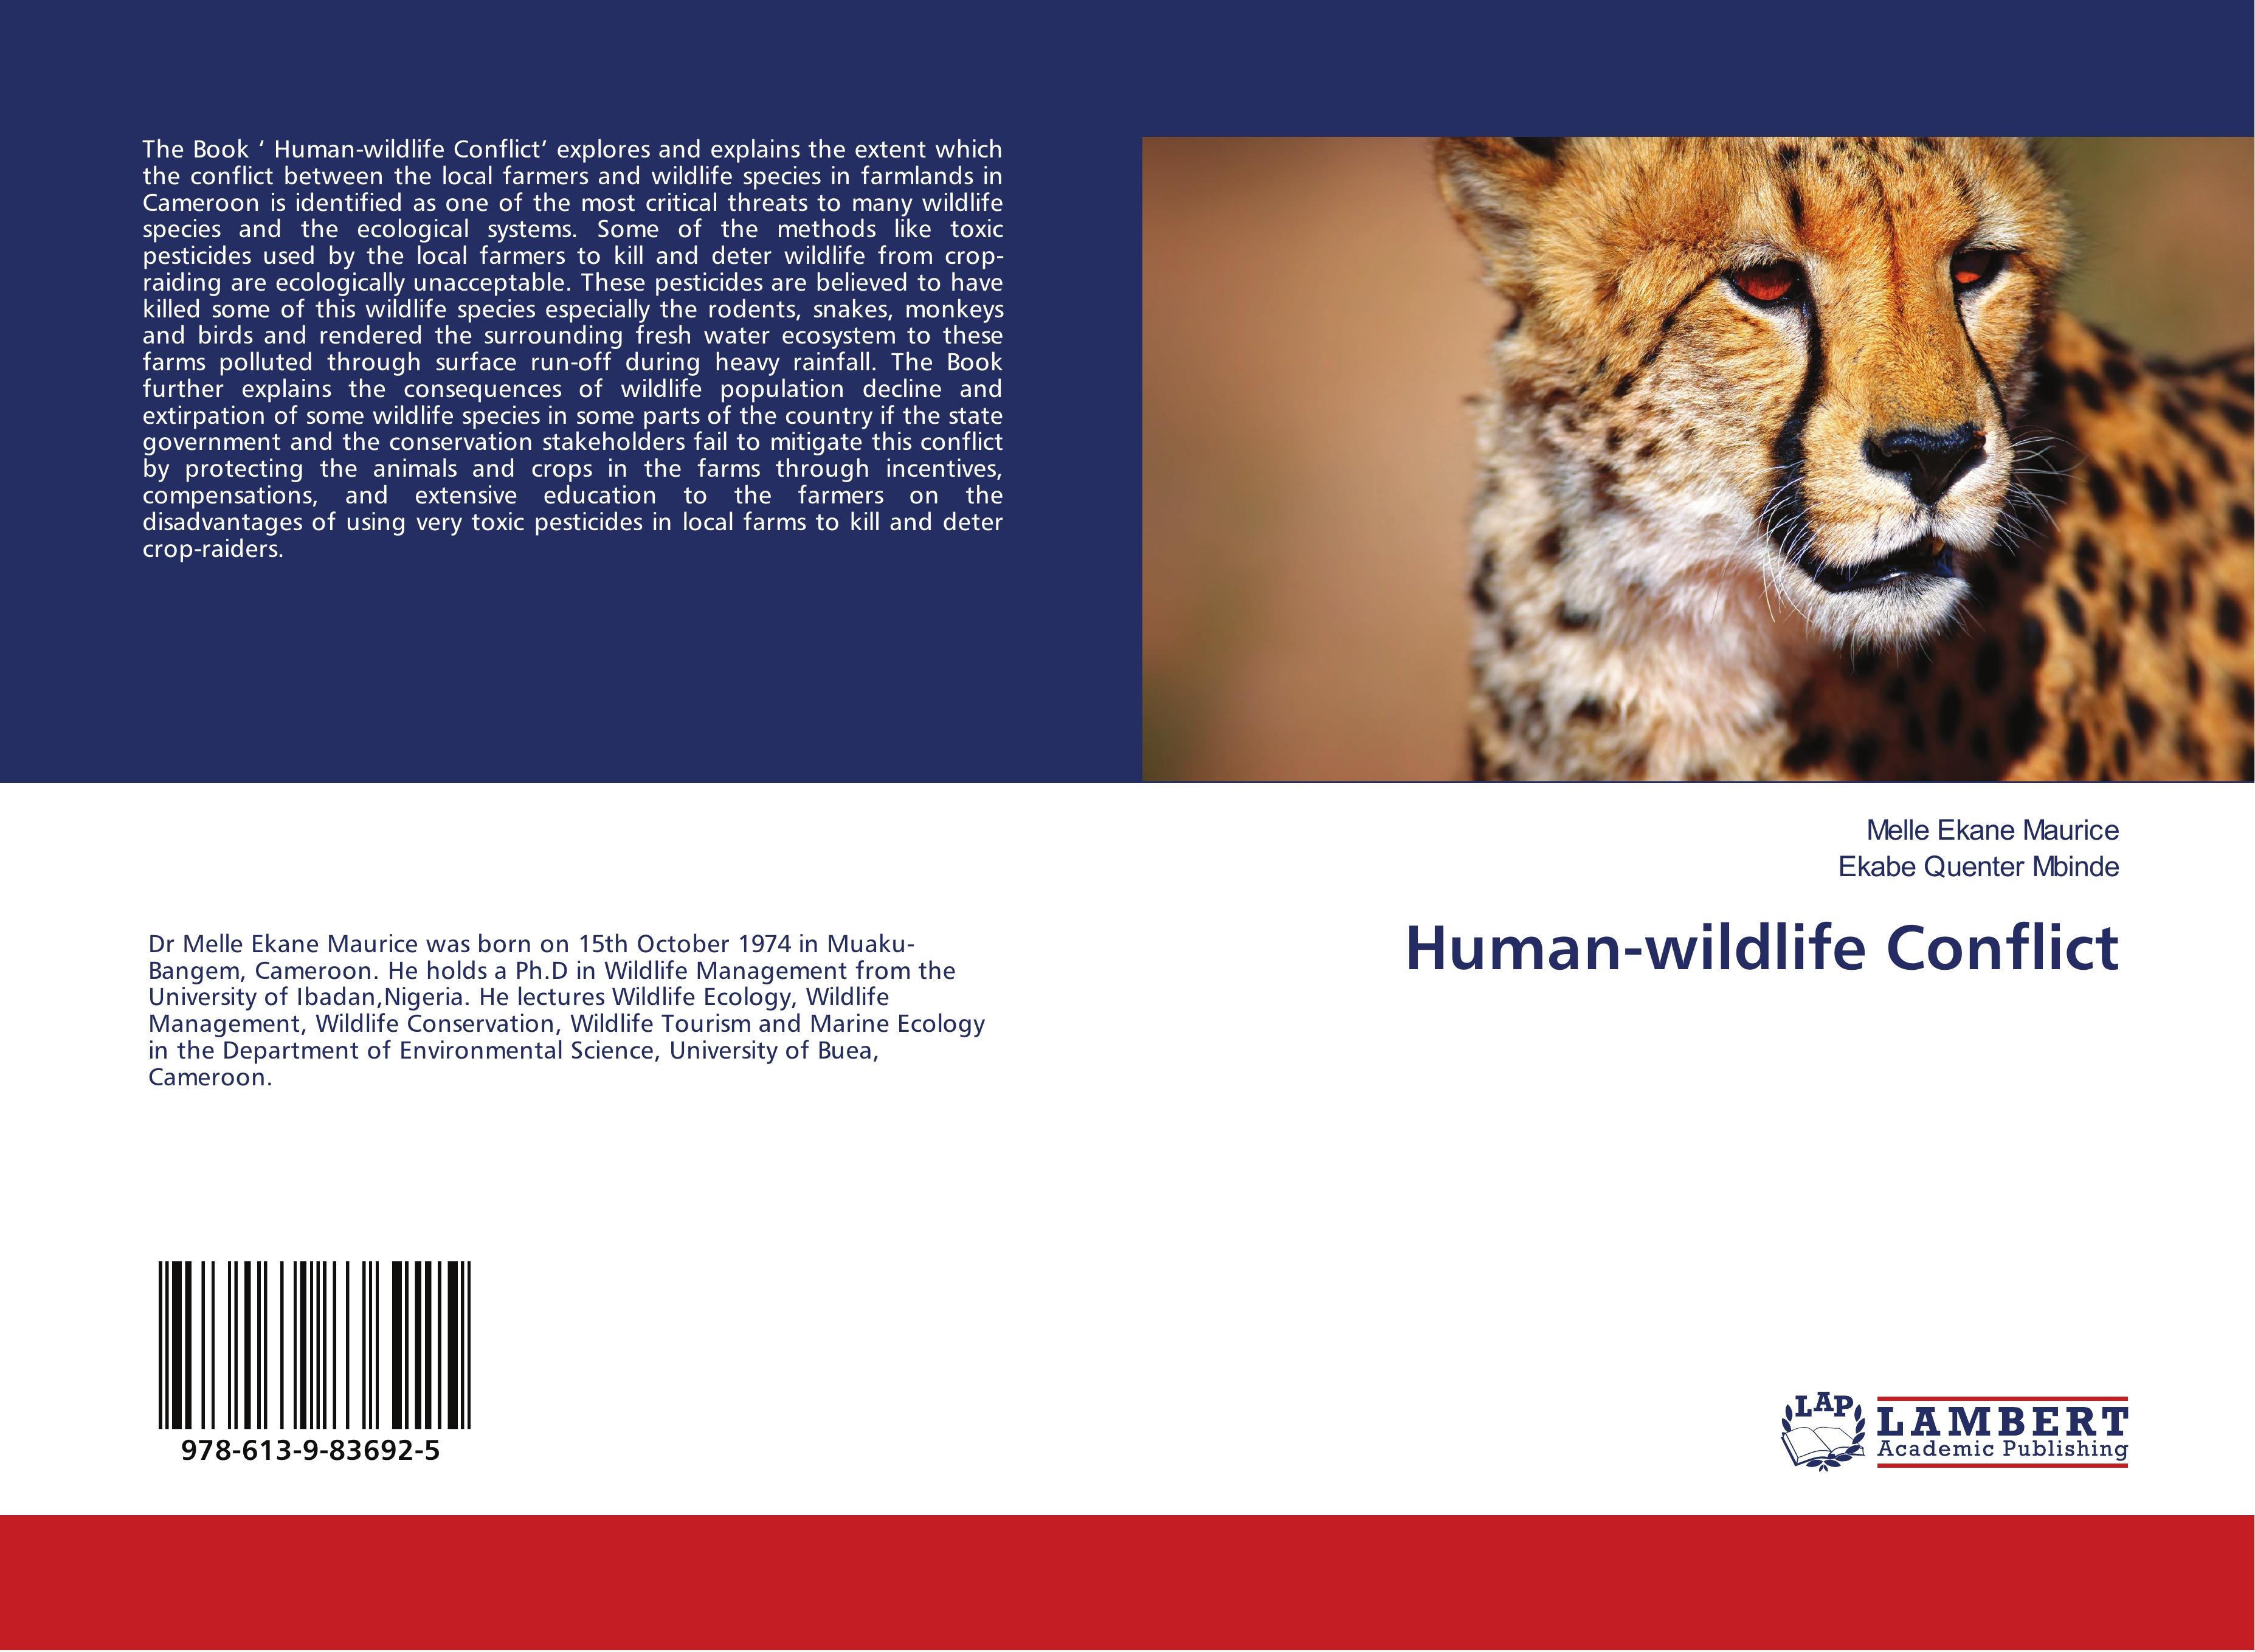 Human-wildlife Conflict - Melle Ekane Maurice Ekabe Quenter Mbinde